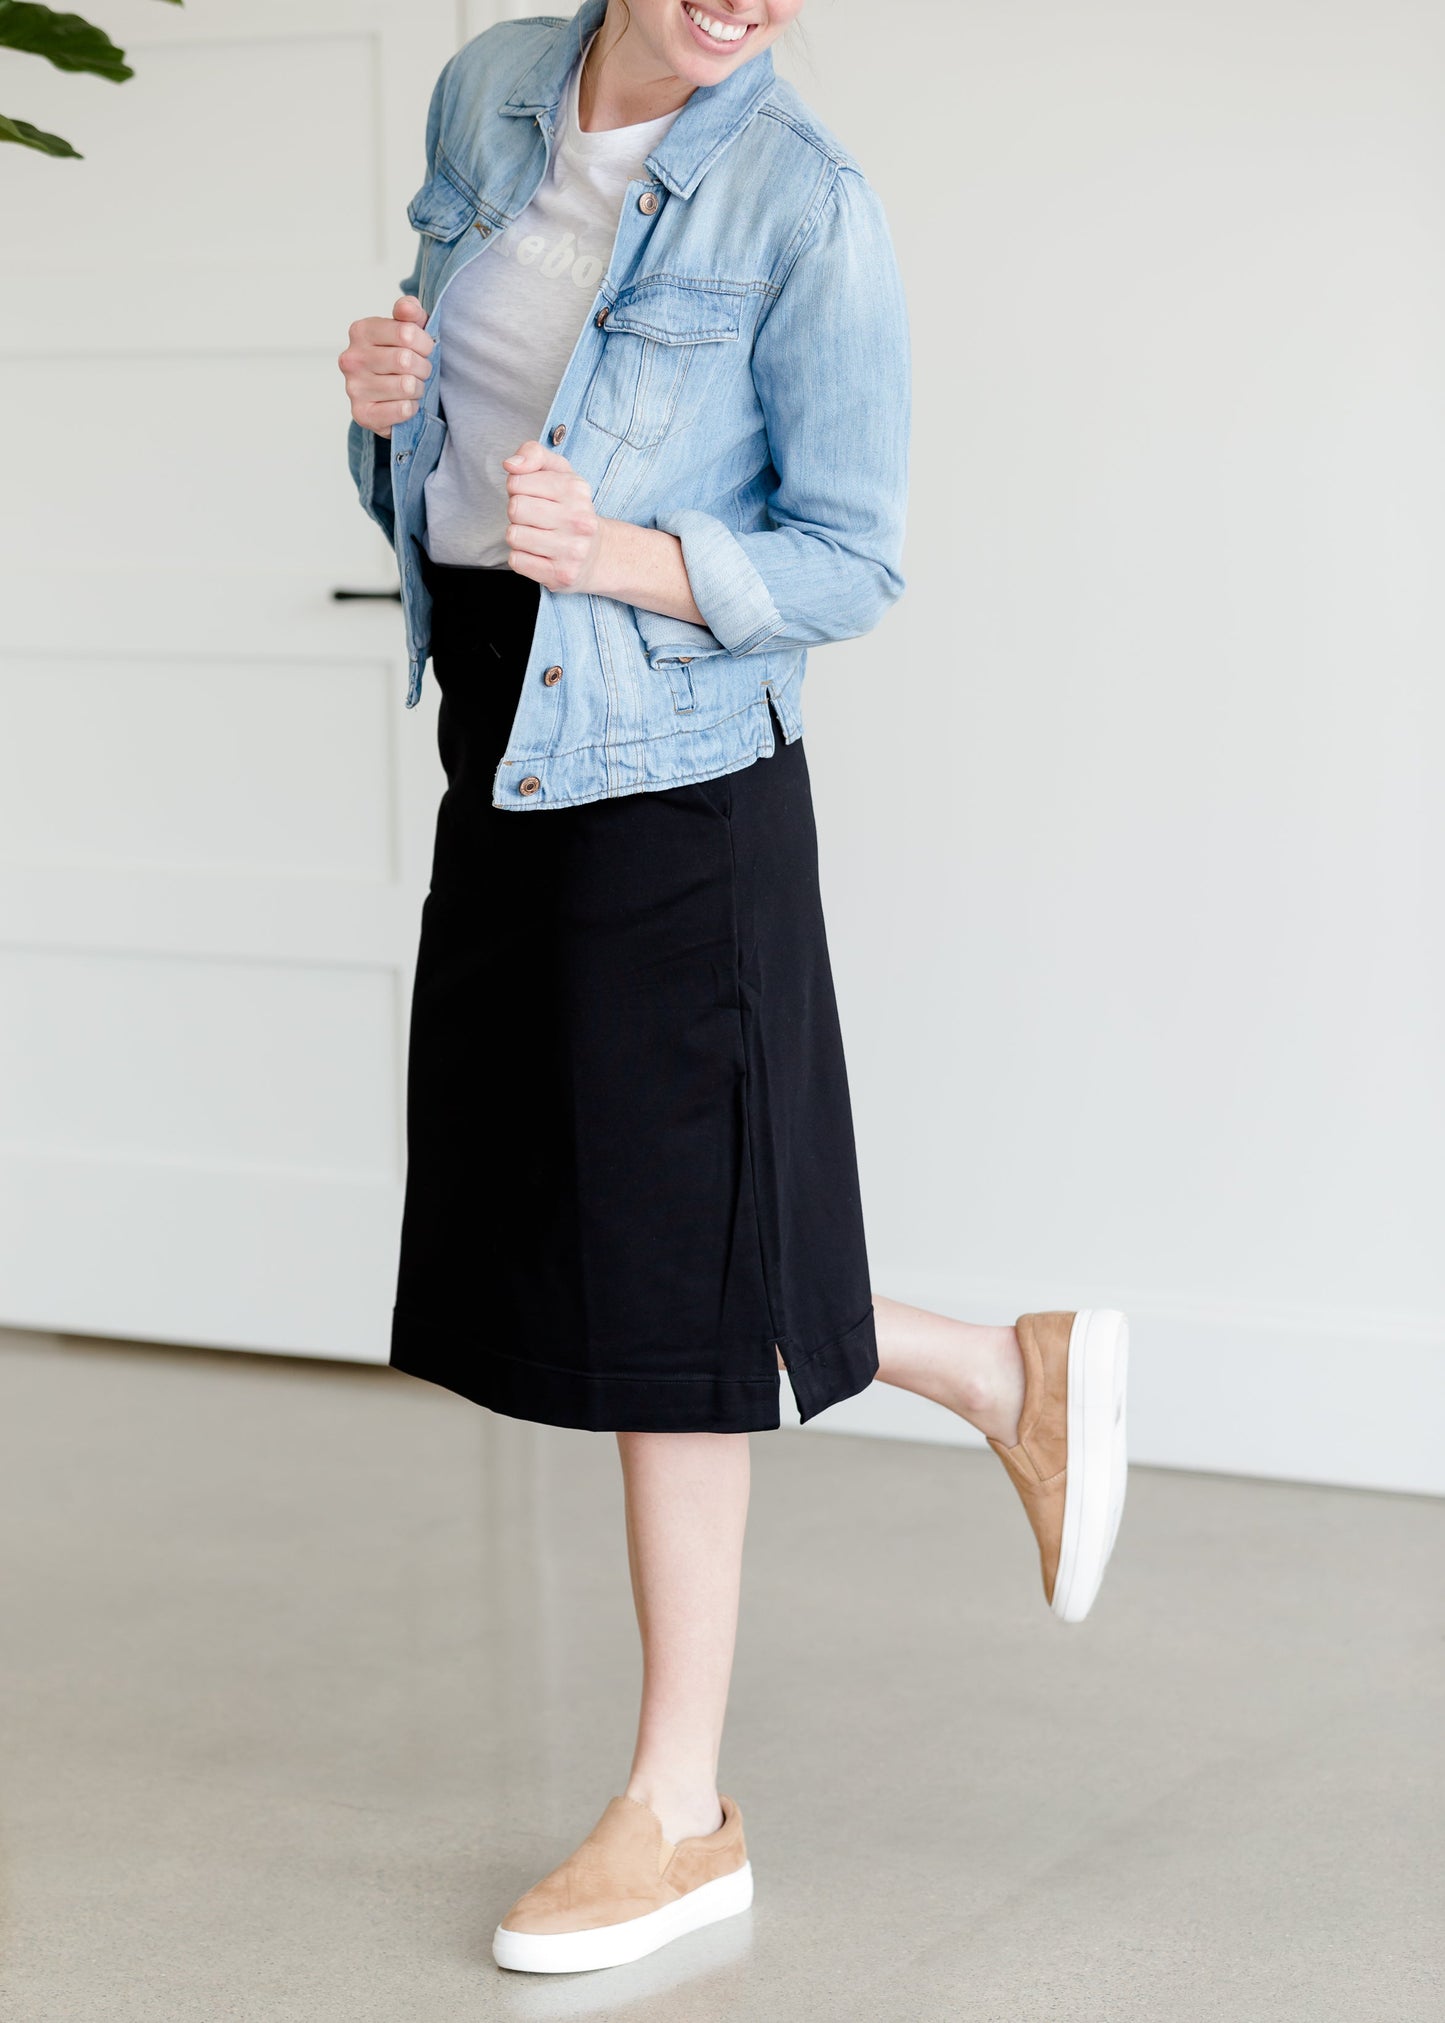 Jordan Midi Skirt - FINAL SALE Skirts